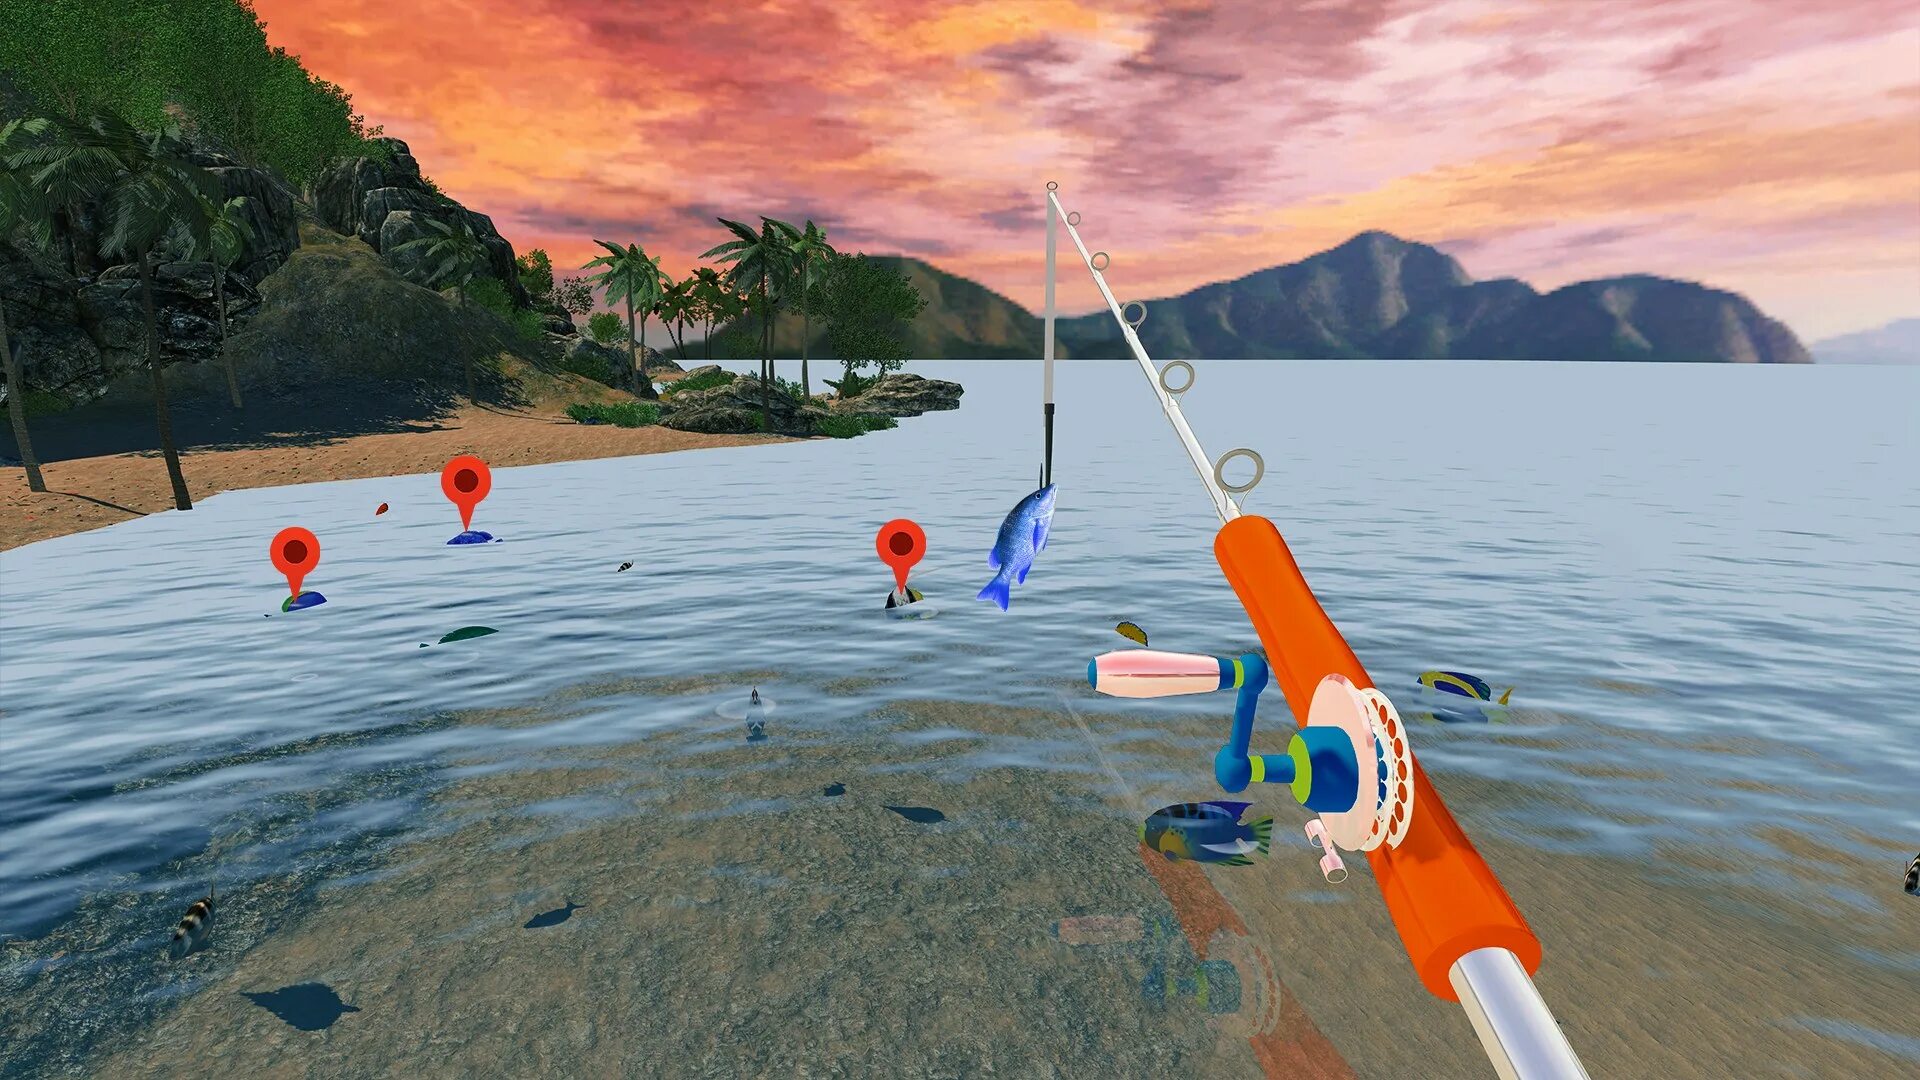 Игра рыбалка. Компьютерная игра рыбалка. Рыбалка игра на ПК. Симулятор рыбалки. Игра на воде 6